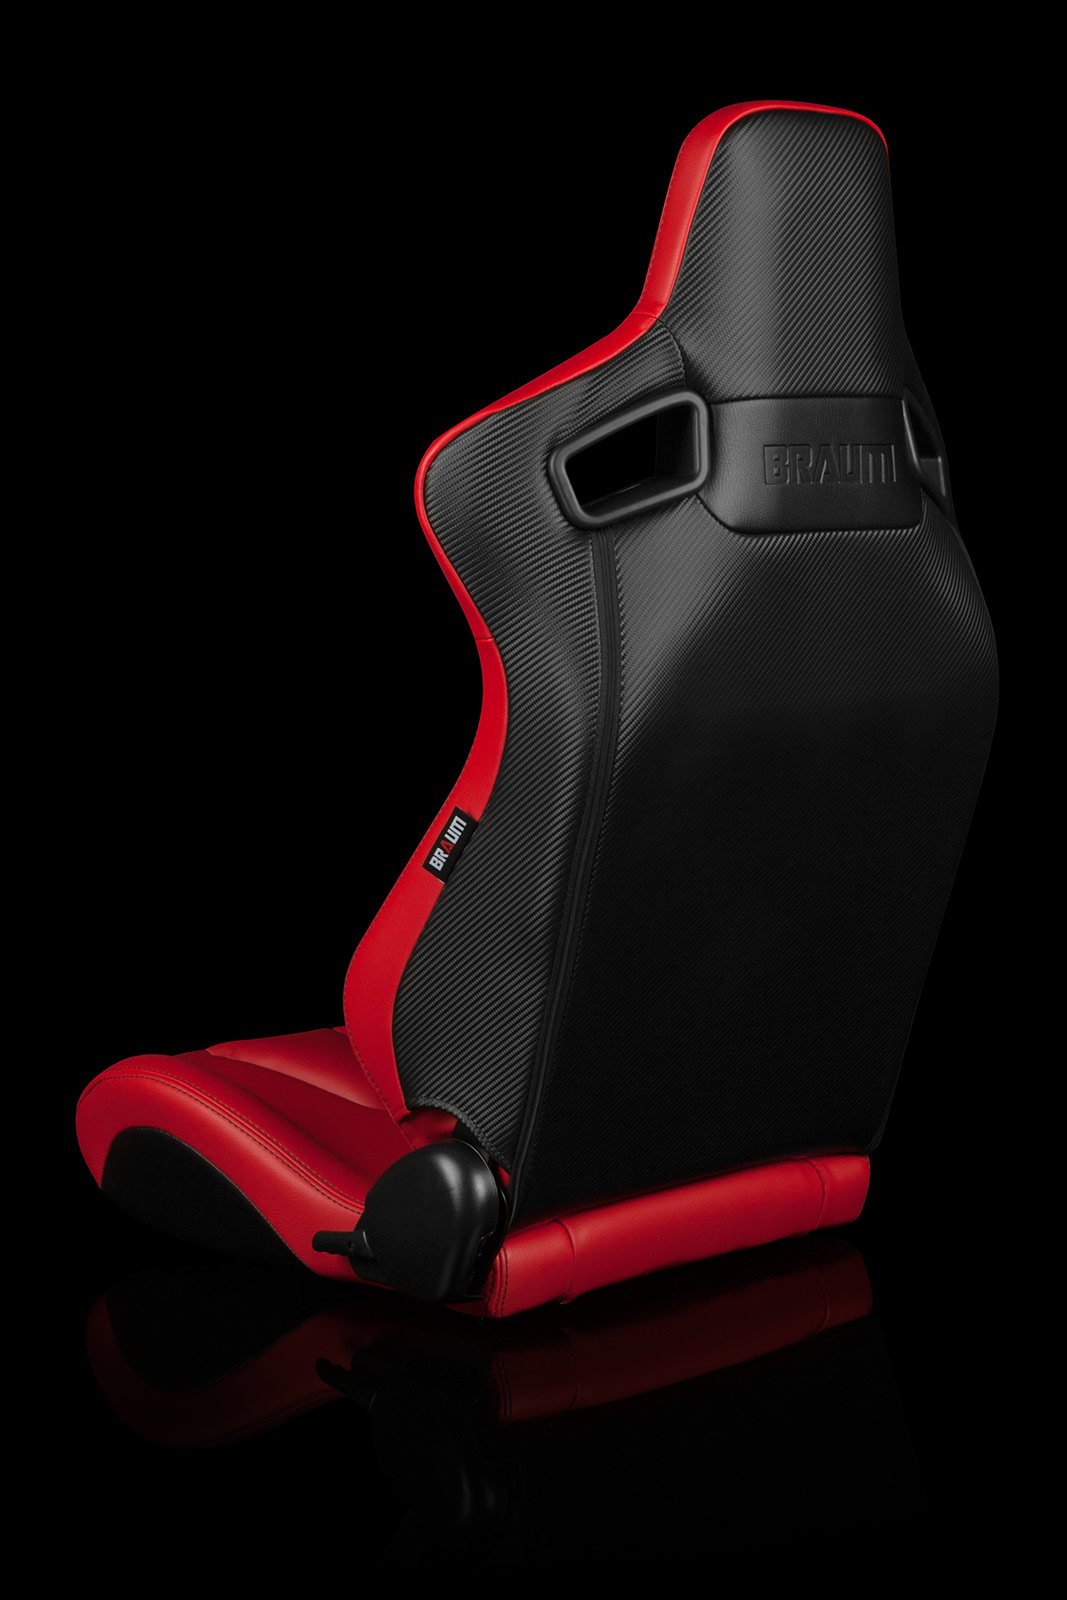 Braum Elite Series Sport Seats - Red Leatherette / Black Stitching (PAIR) - Lowered Lifestyle